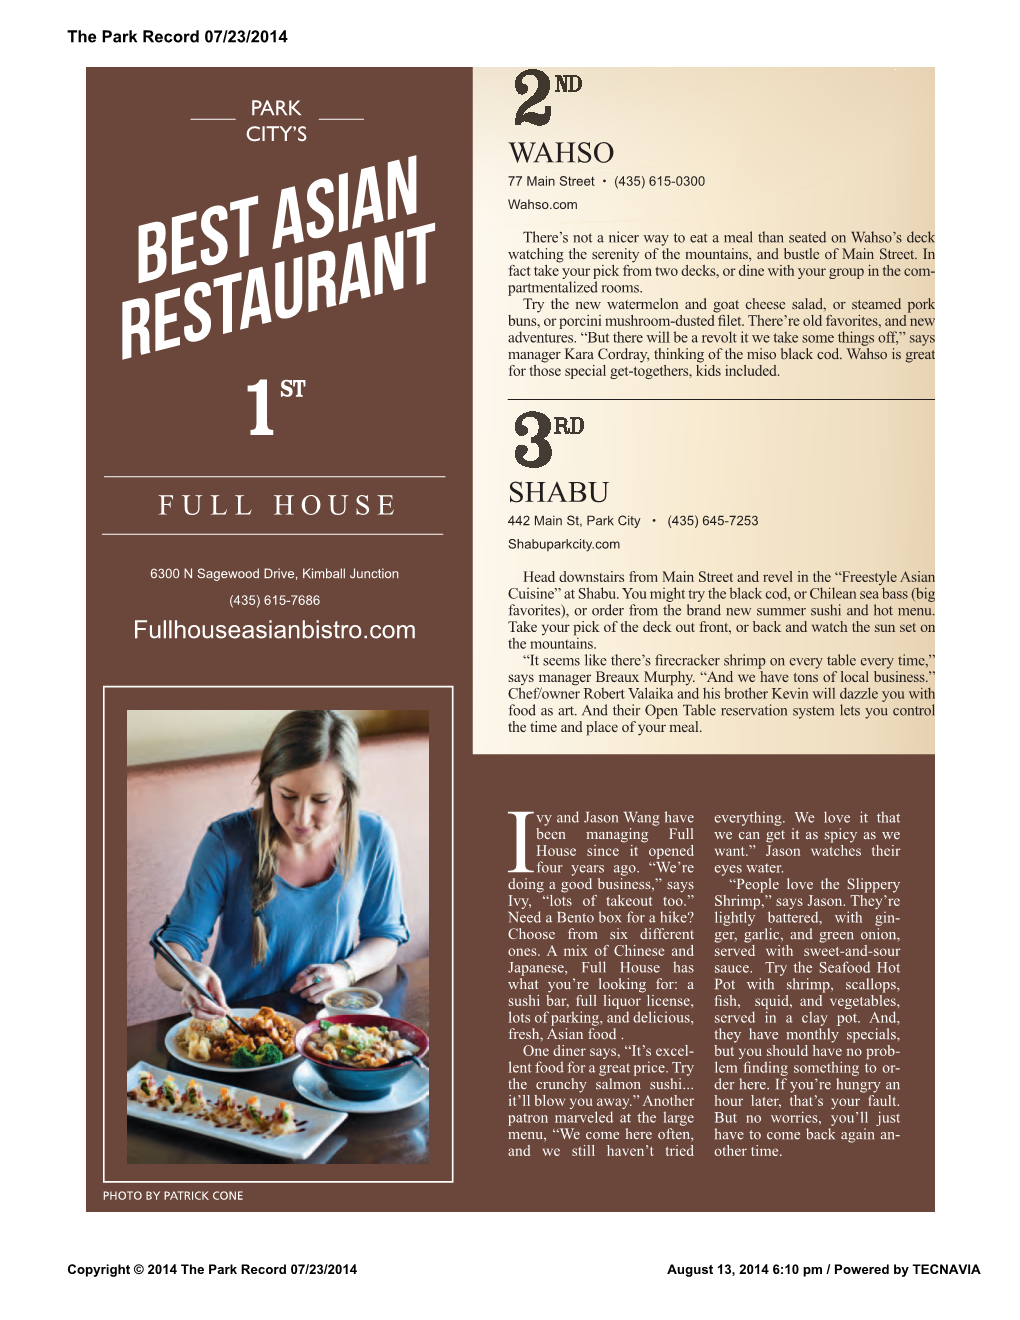 Best Asian Restaurant